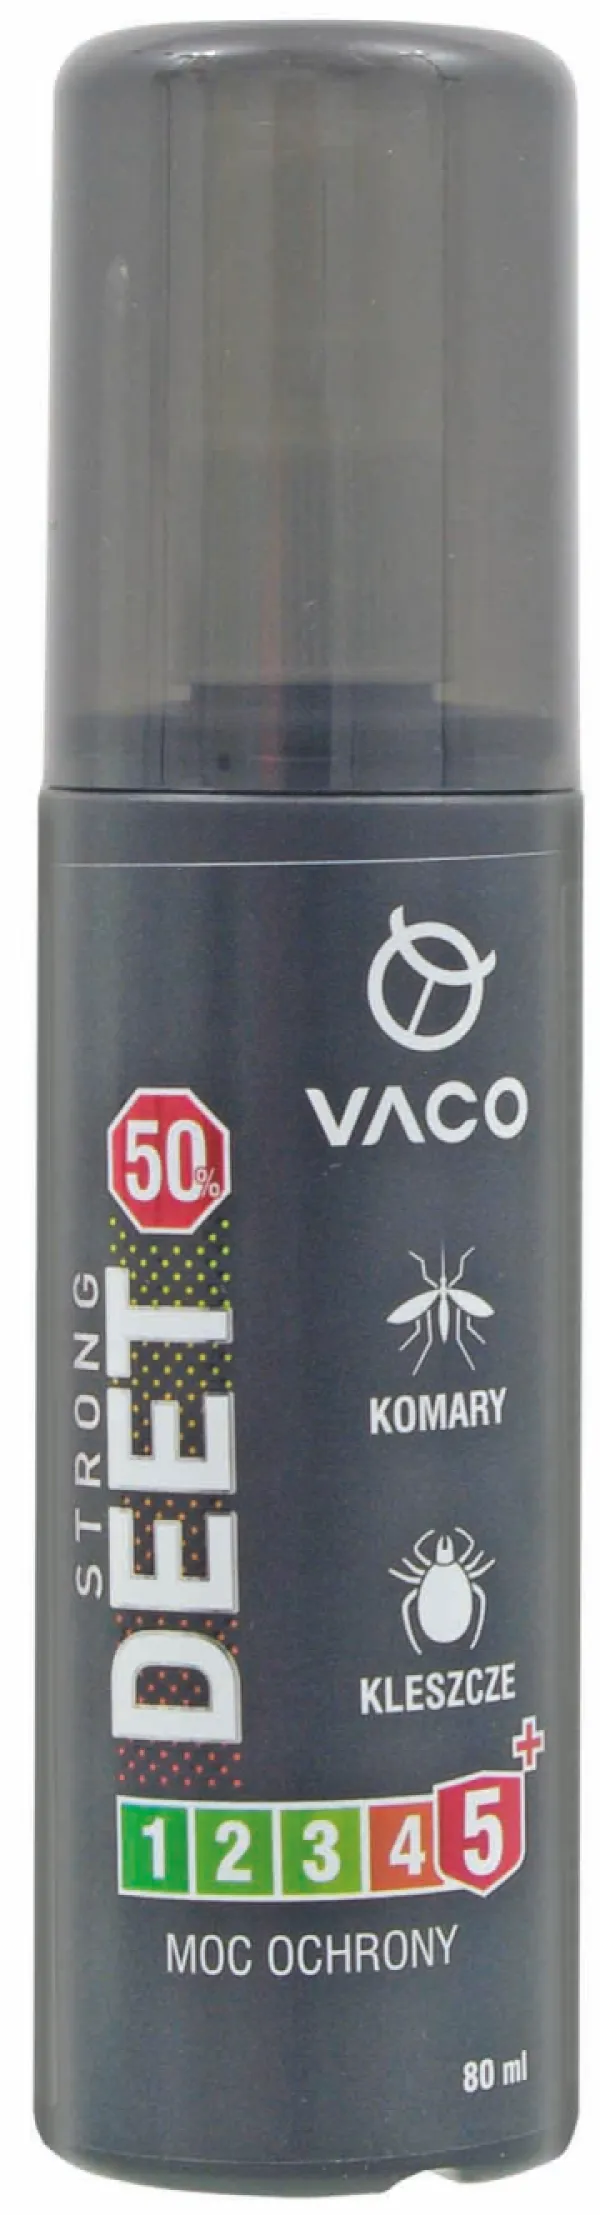 VACO Vaco Strong Spray 50% DEET Anti Insect + Geraniol 80m...